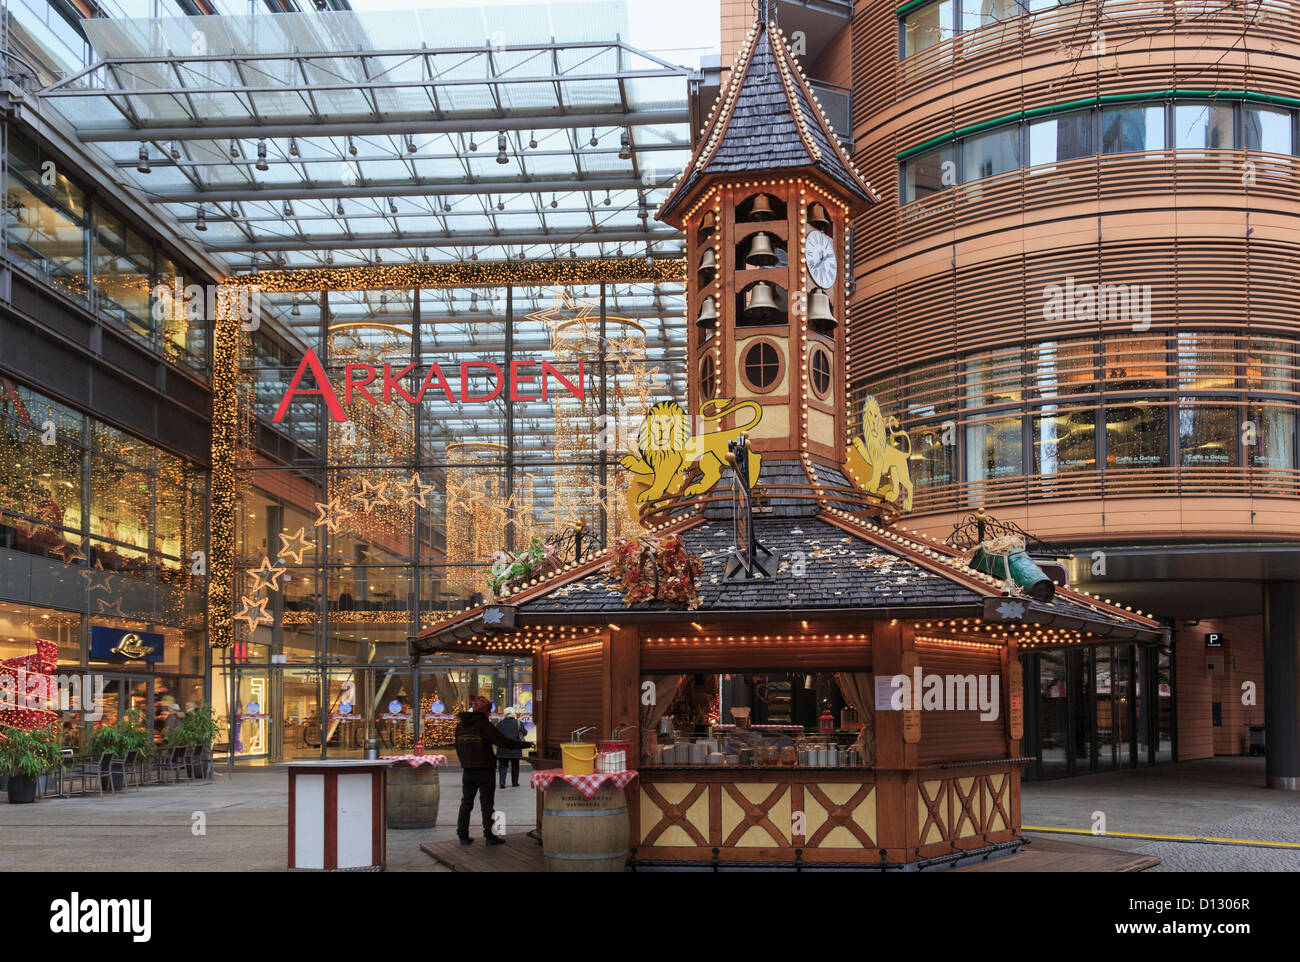 Weihnachtsmarkt am stall am Eingang Arkaden Shopping Centre Mall am Potsdamer Platz, Berlin, Deutschland Stockfoto